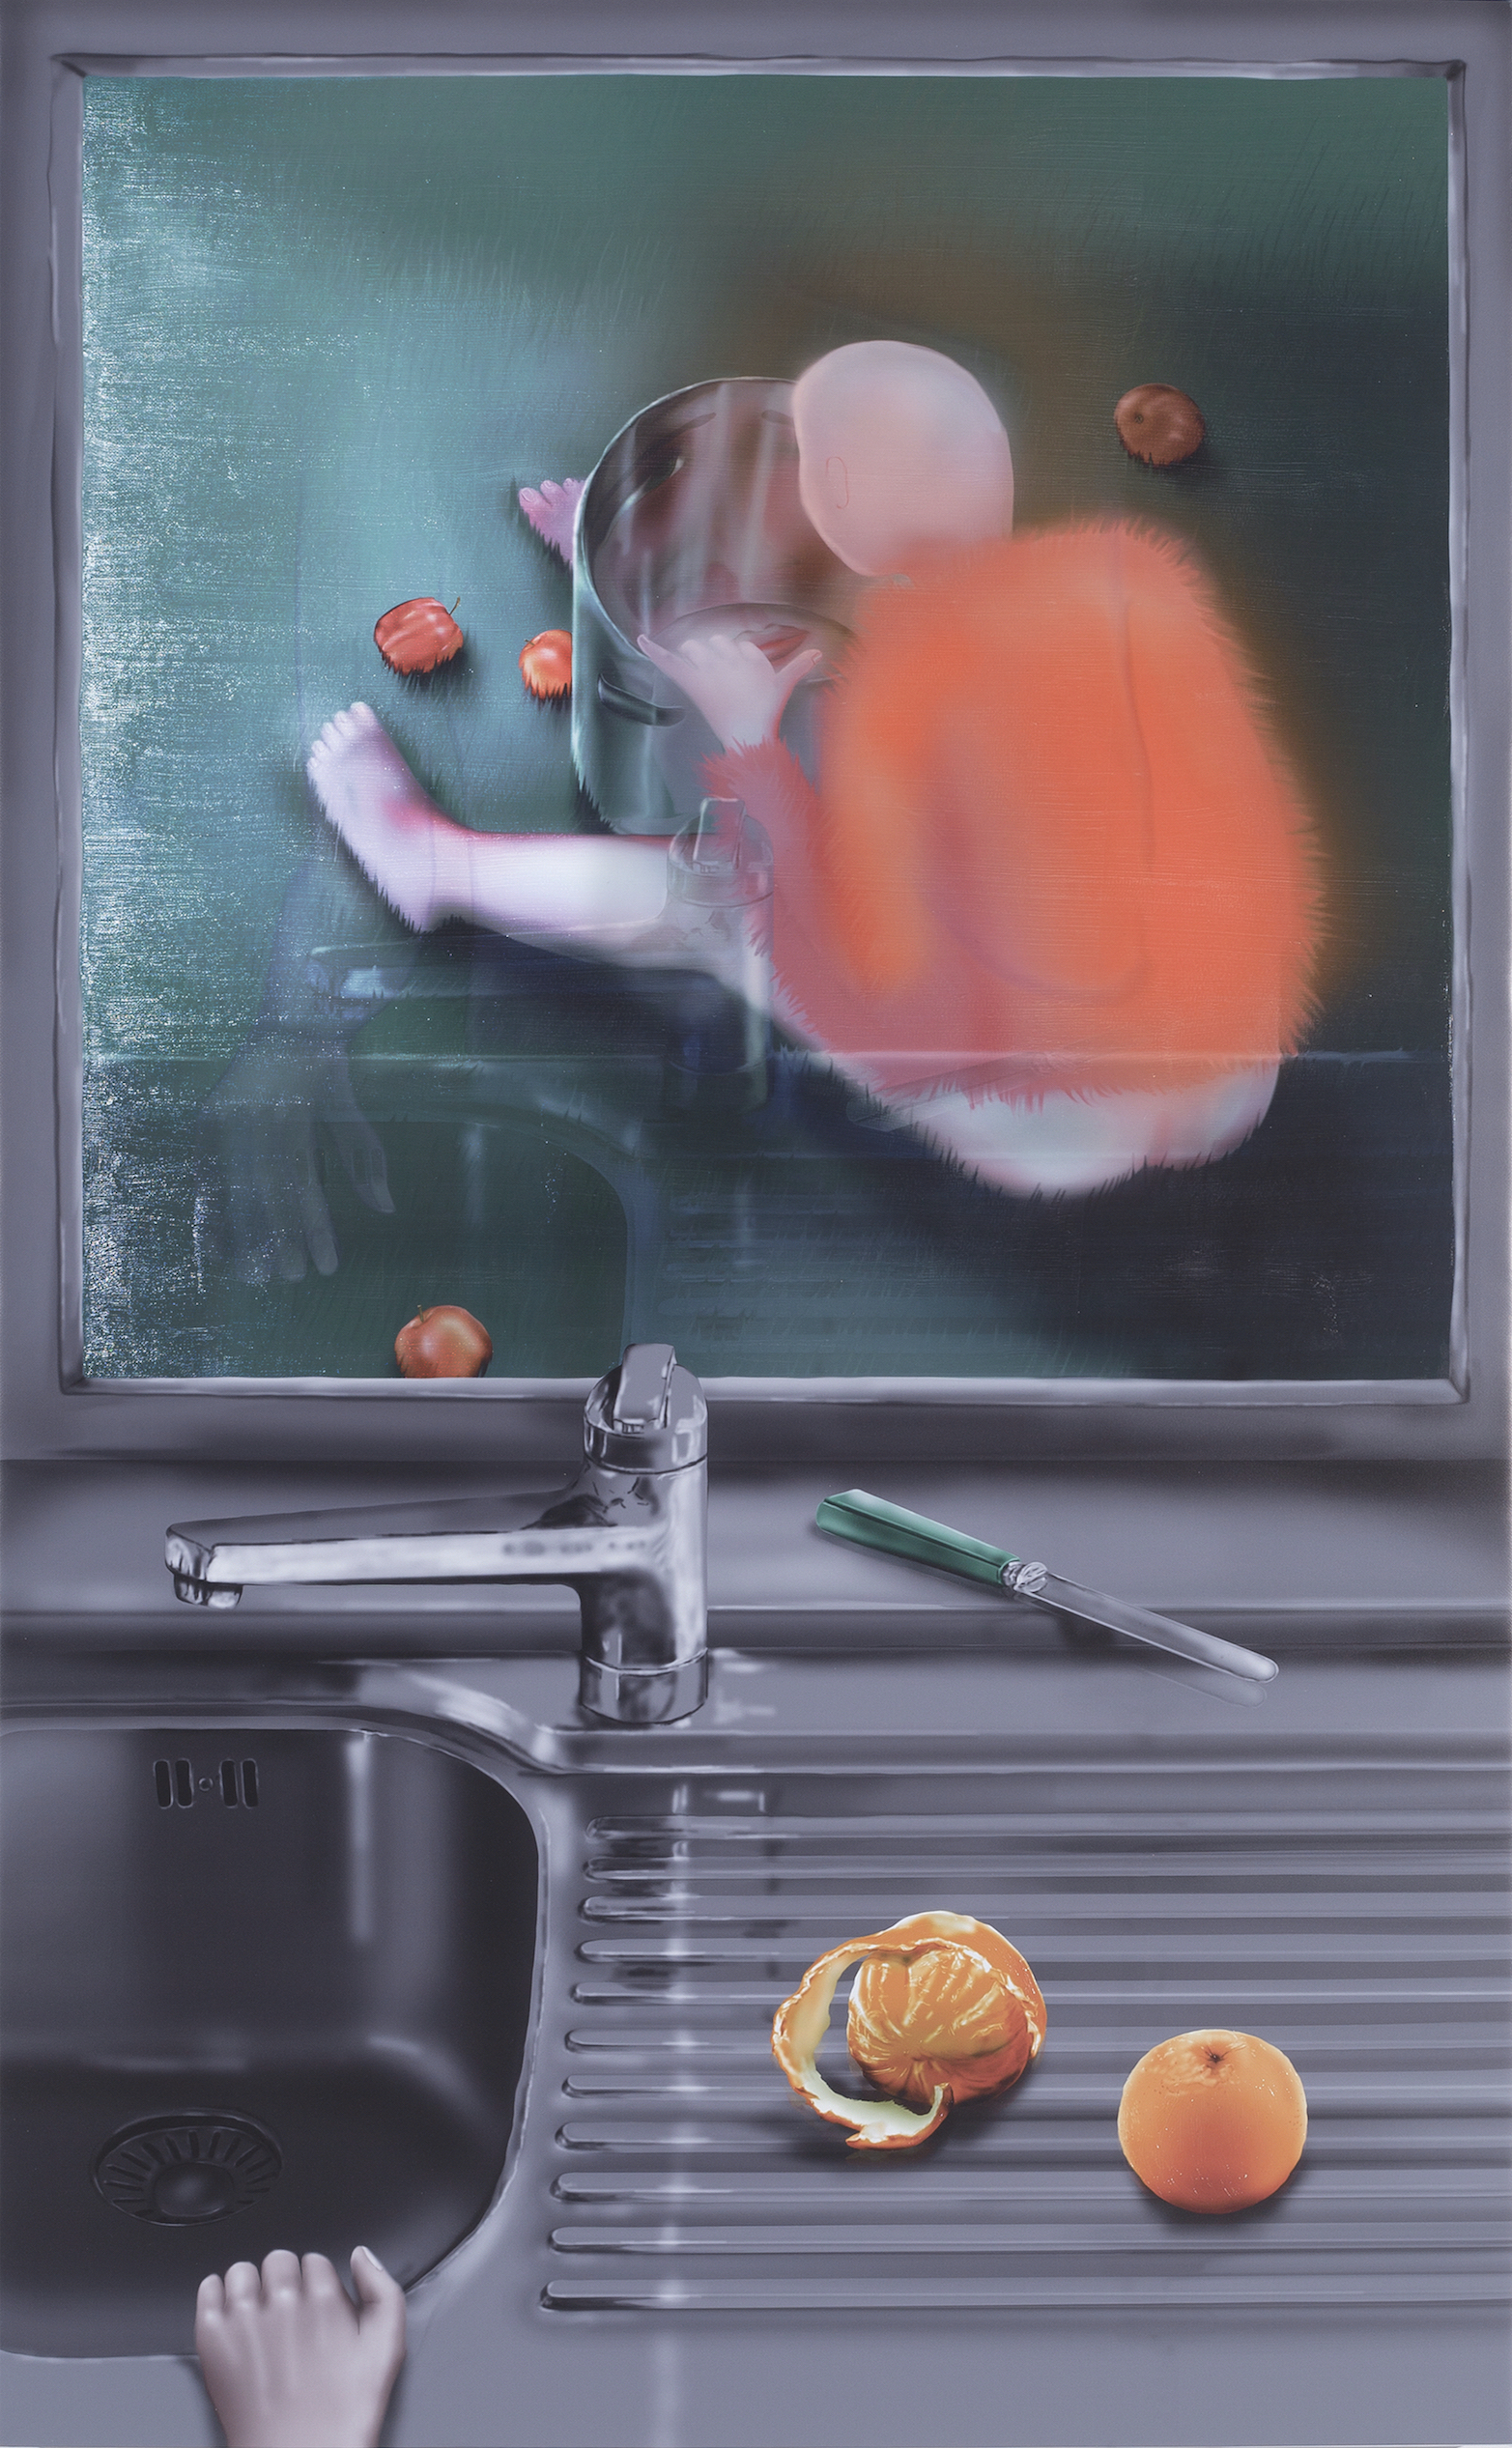 Louisa Gagliardi
Apples and Oranges
2020
gel medium, ink on PVC
180 × 112 cm